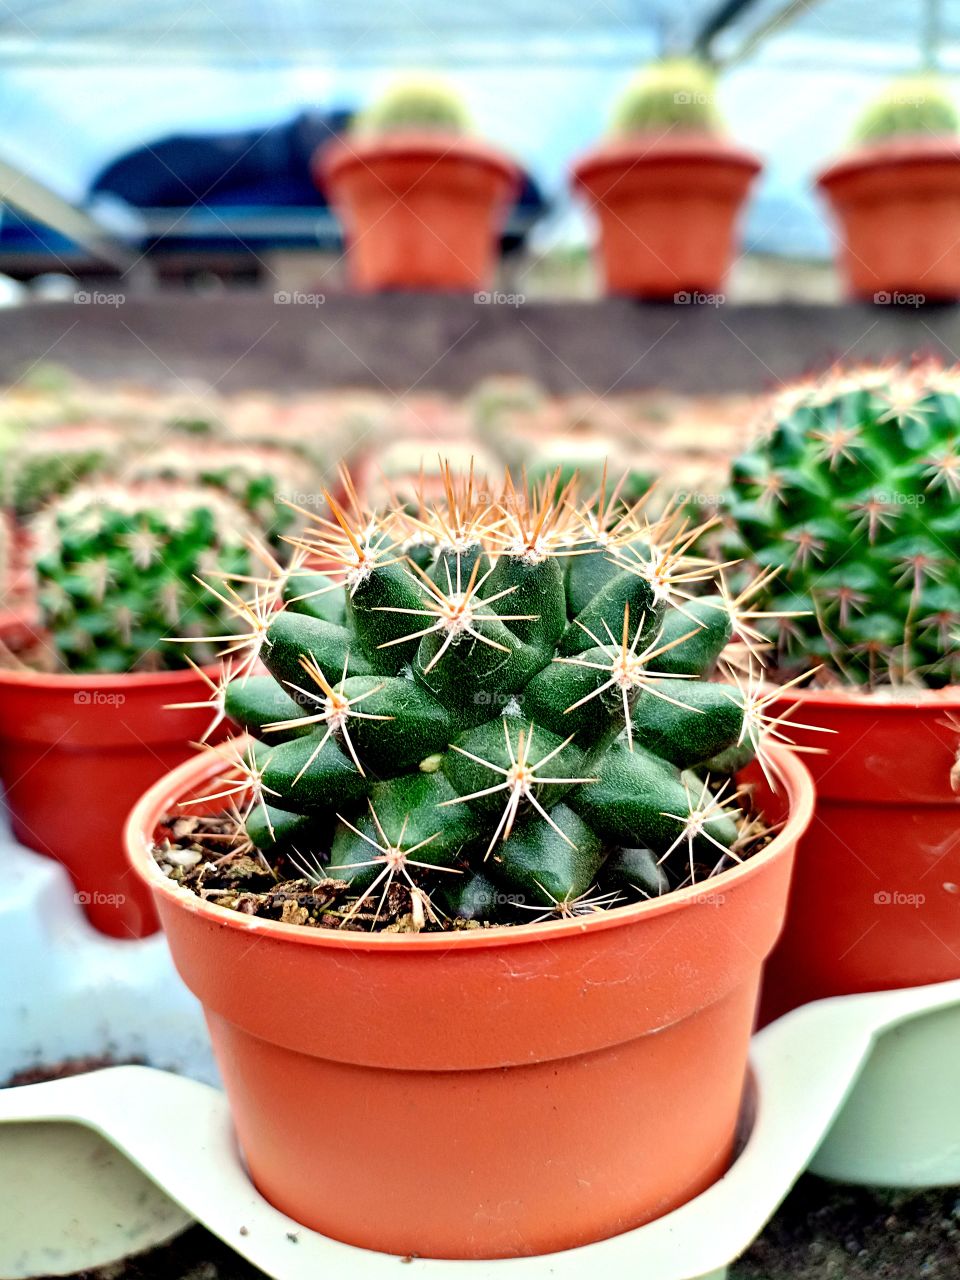 😍😍😍 Baby Cactus~